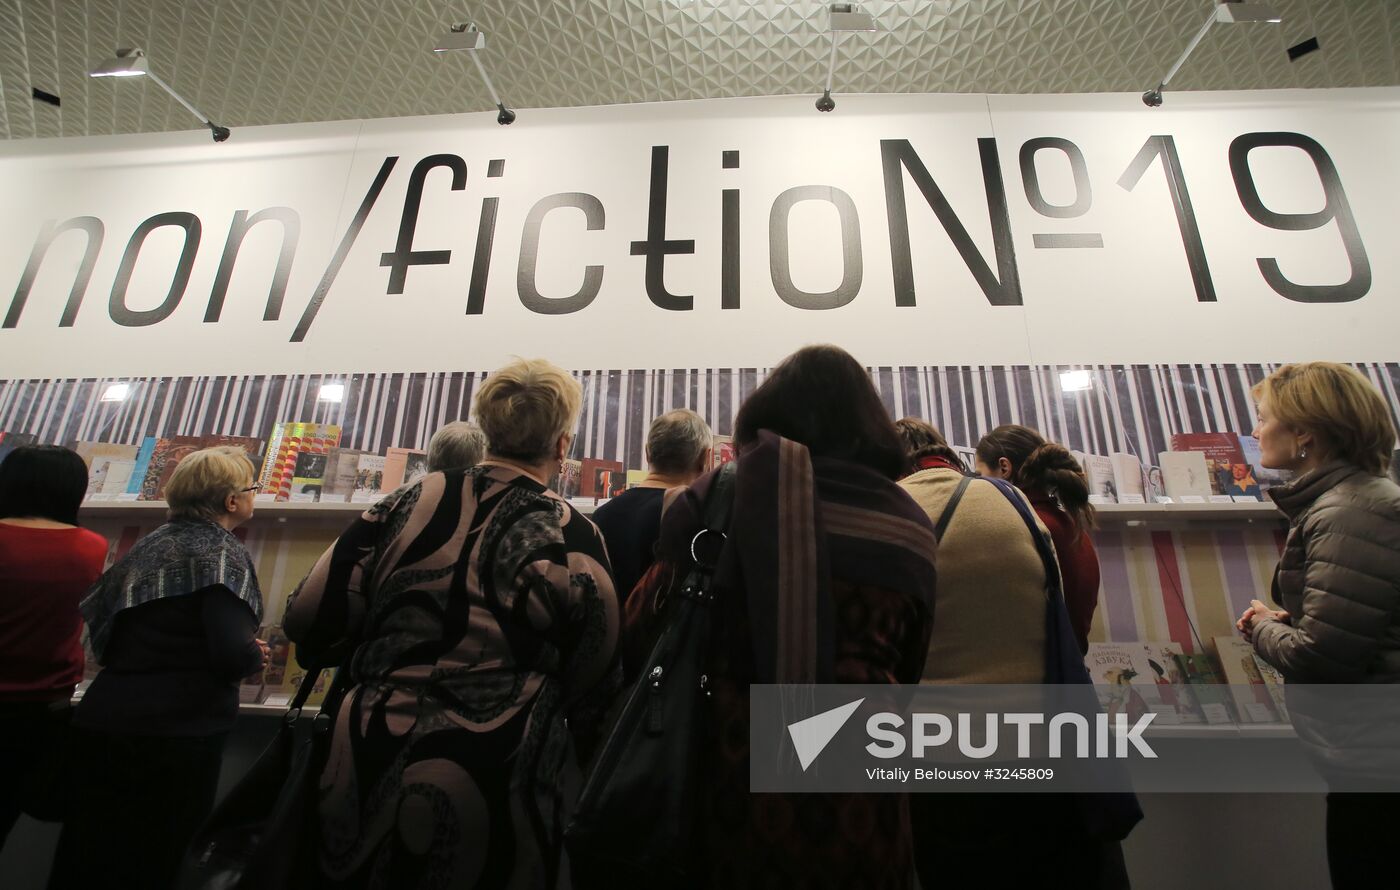 International intellectual literature fair 'non/fictioN19'